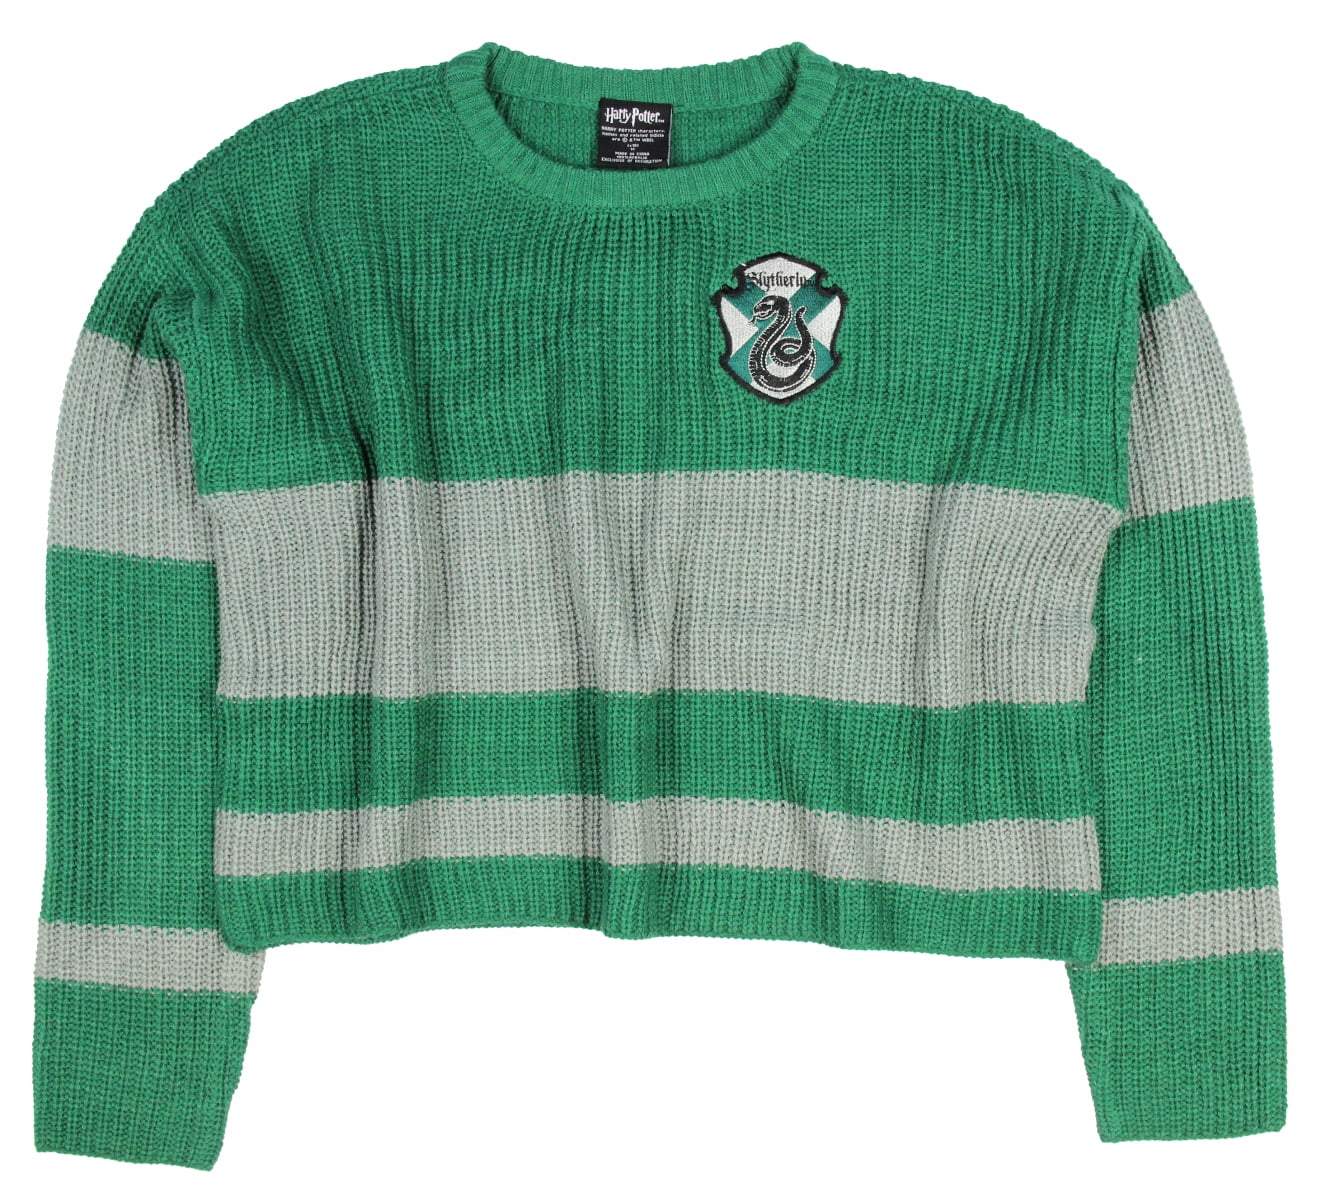 Lego New Dark Green Torso Quidditch Robe over Sweater White Collar and Crest 